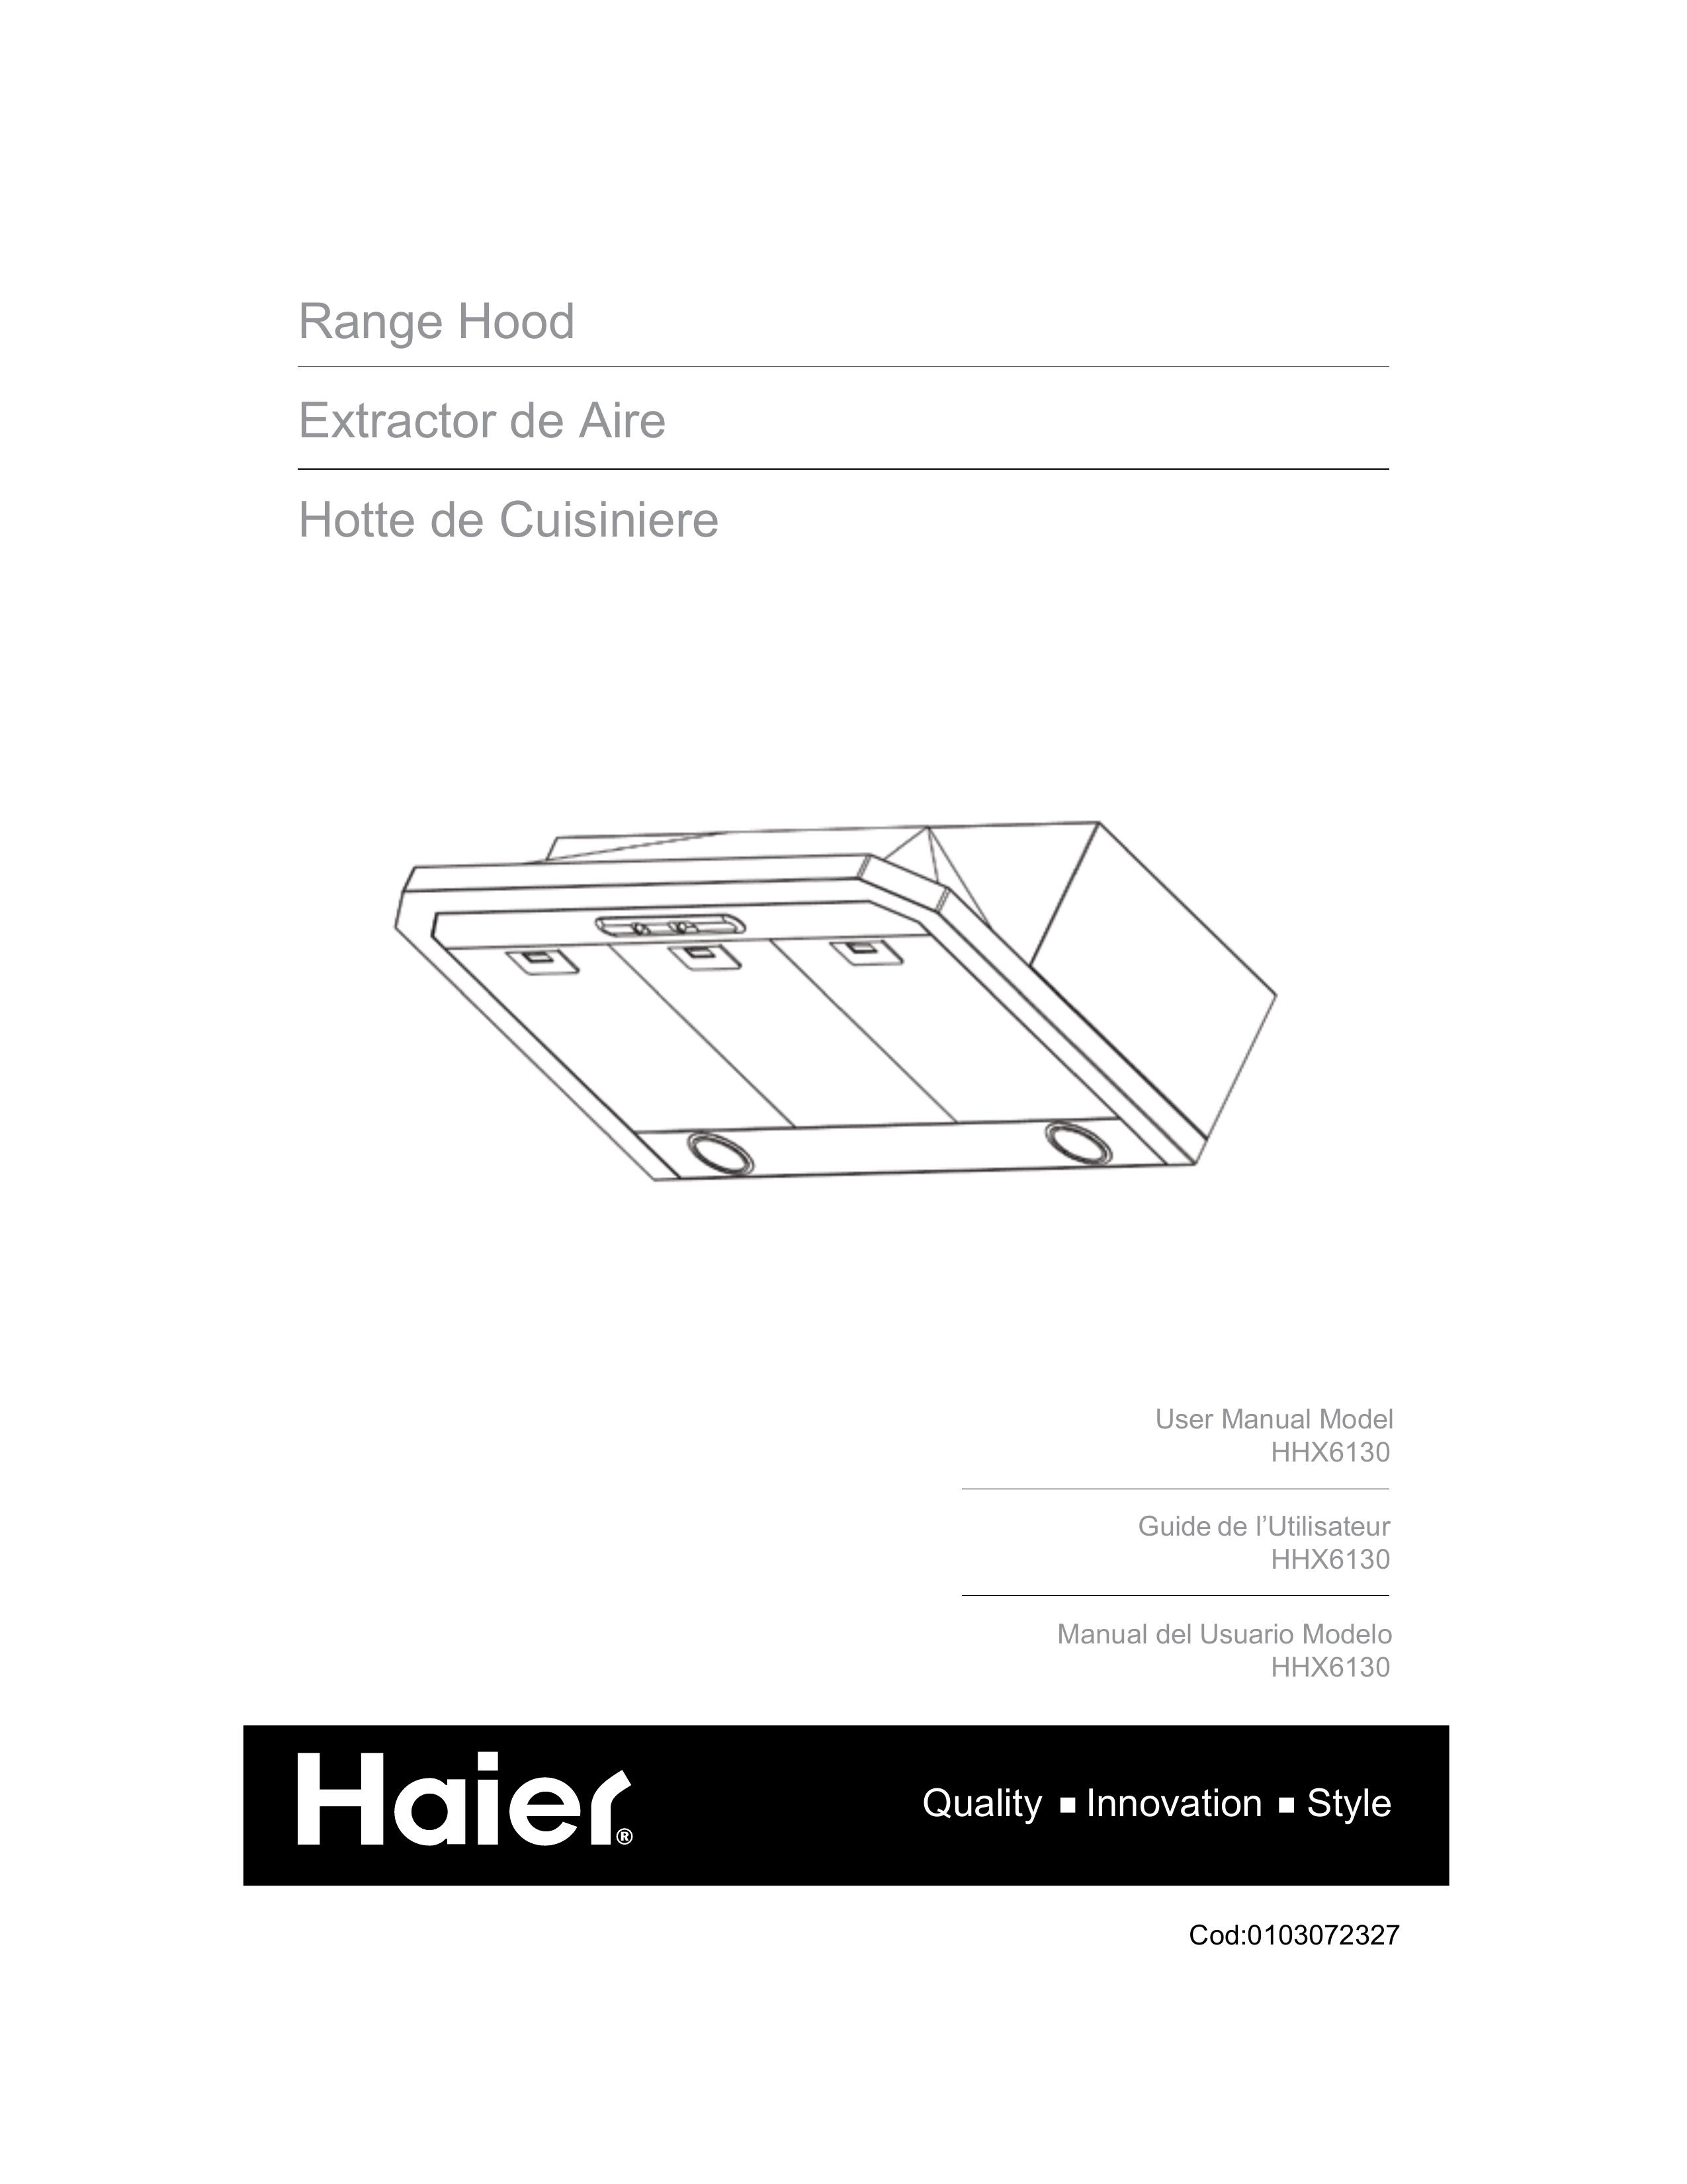 Haier HHX6130 Ventilation Hood User Manual